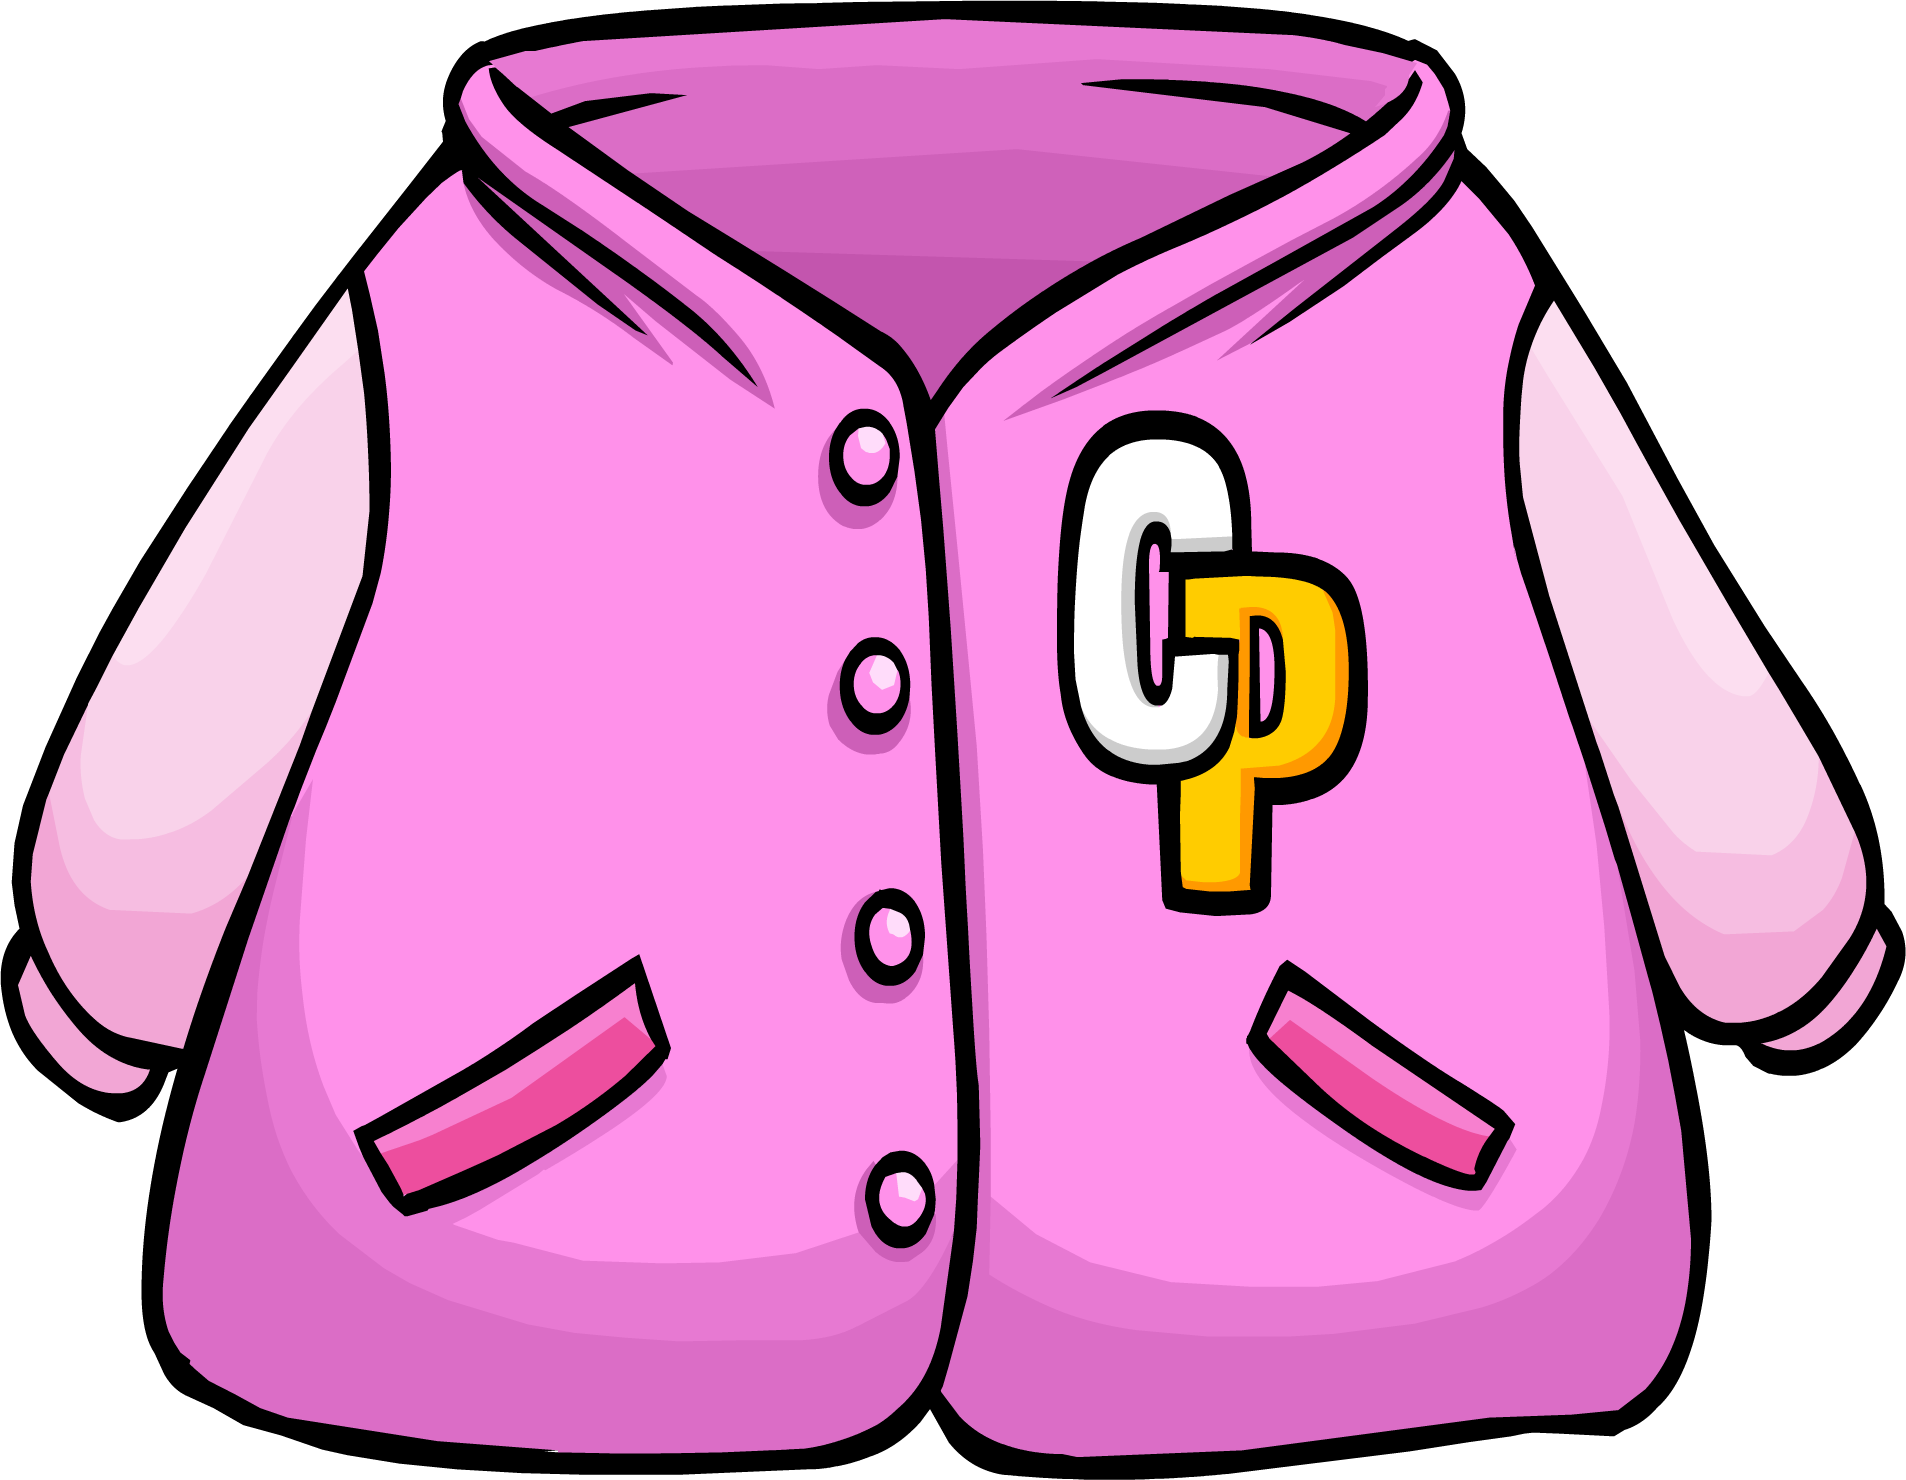 sweatshirt clipart pink jacket